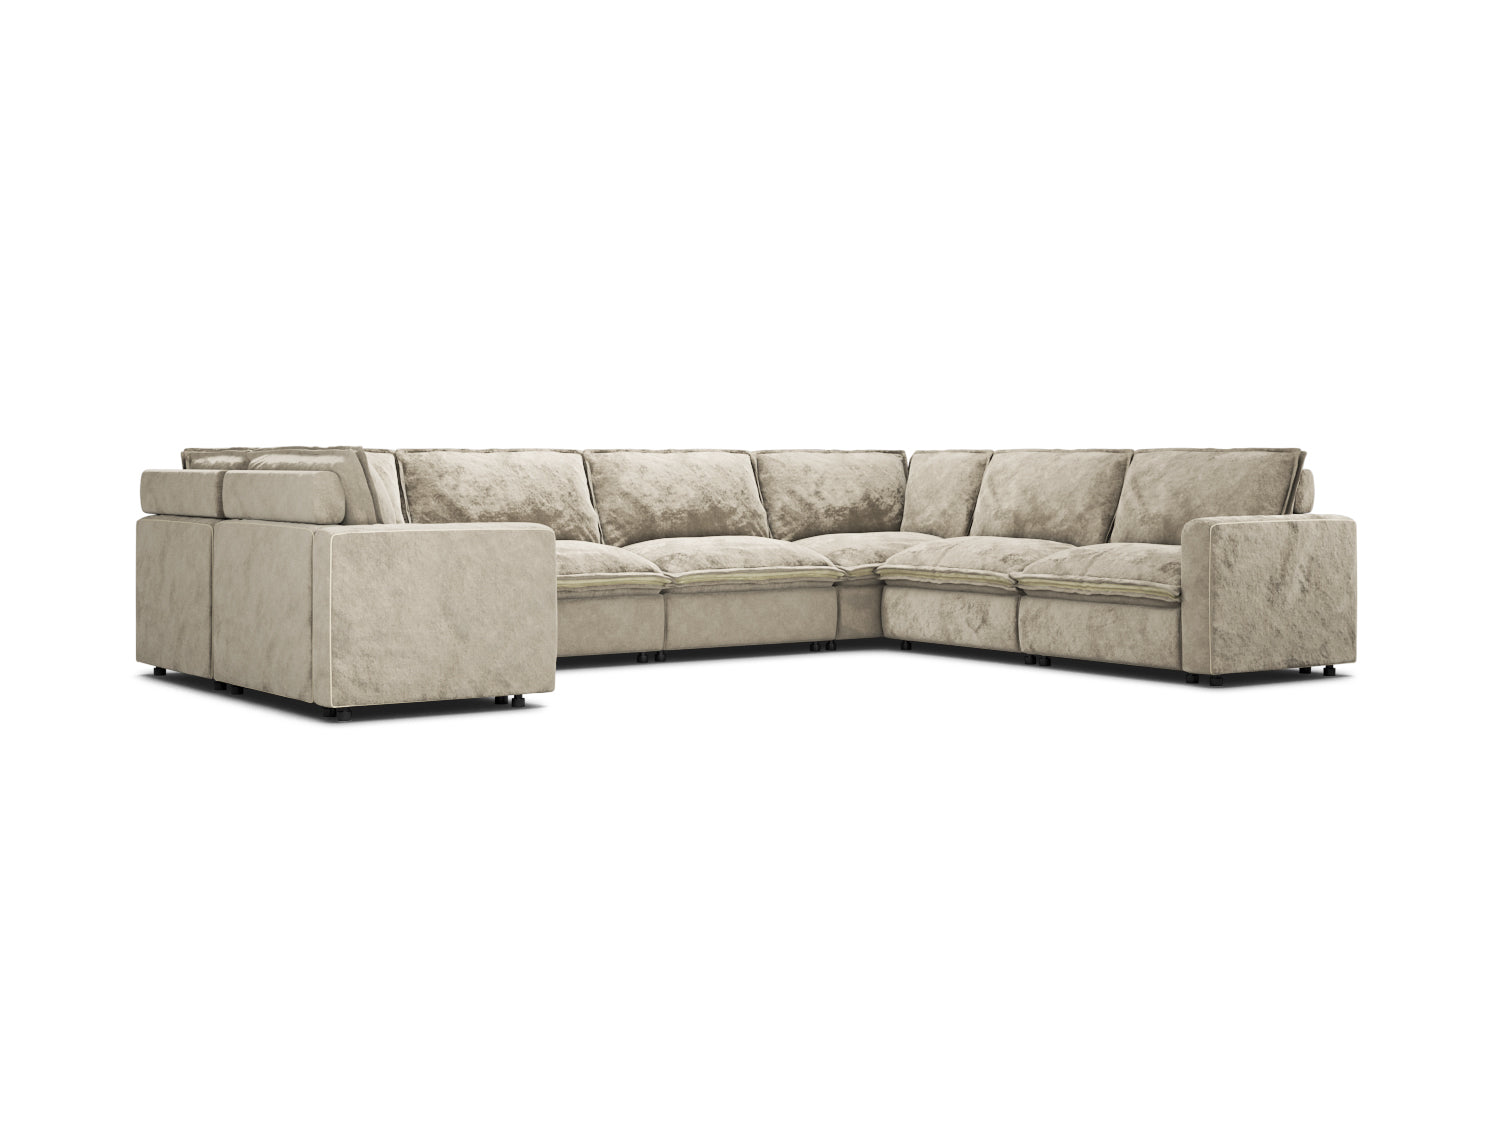 U-shaped 7 seat sectional sofa in beige velvet fabric, modular